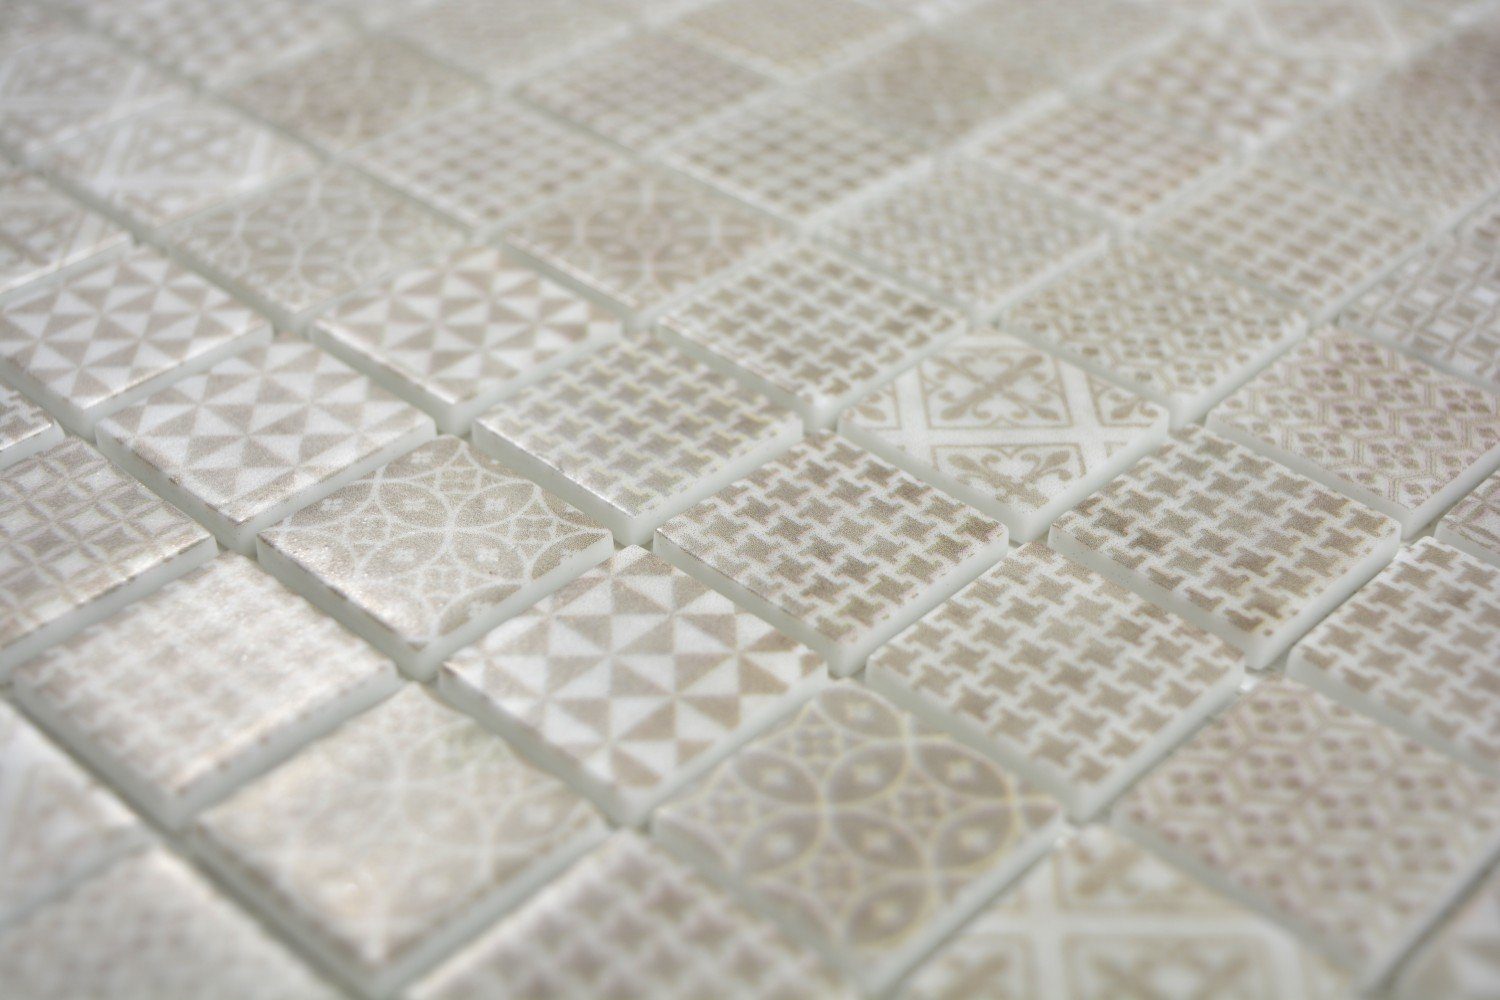 Mosani Mosaikmatten Mosaikfliesen Mosaikfliesen beige matt Glasmosaik / Recycling 10